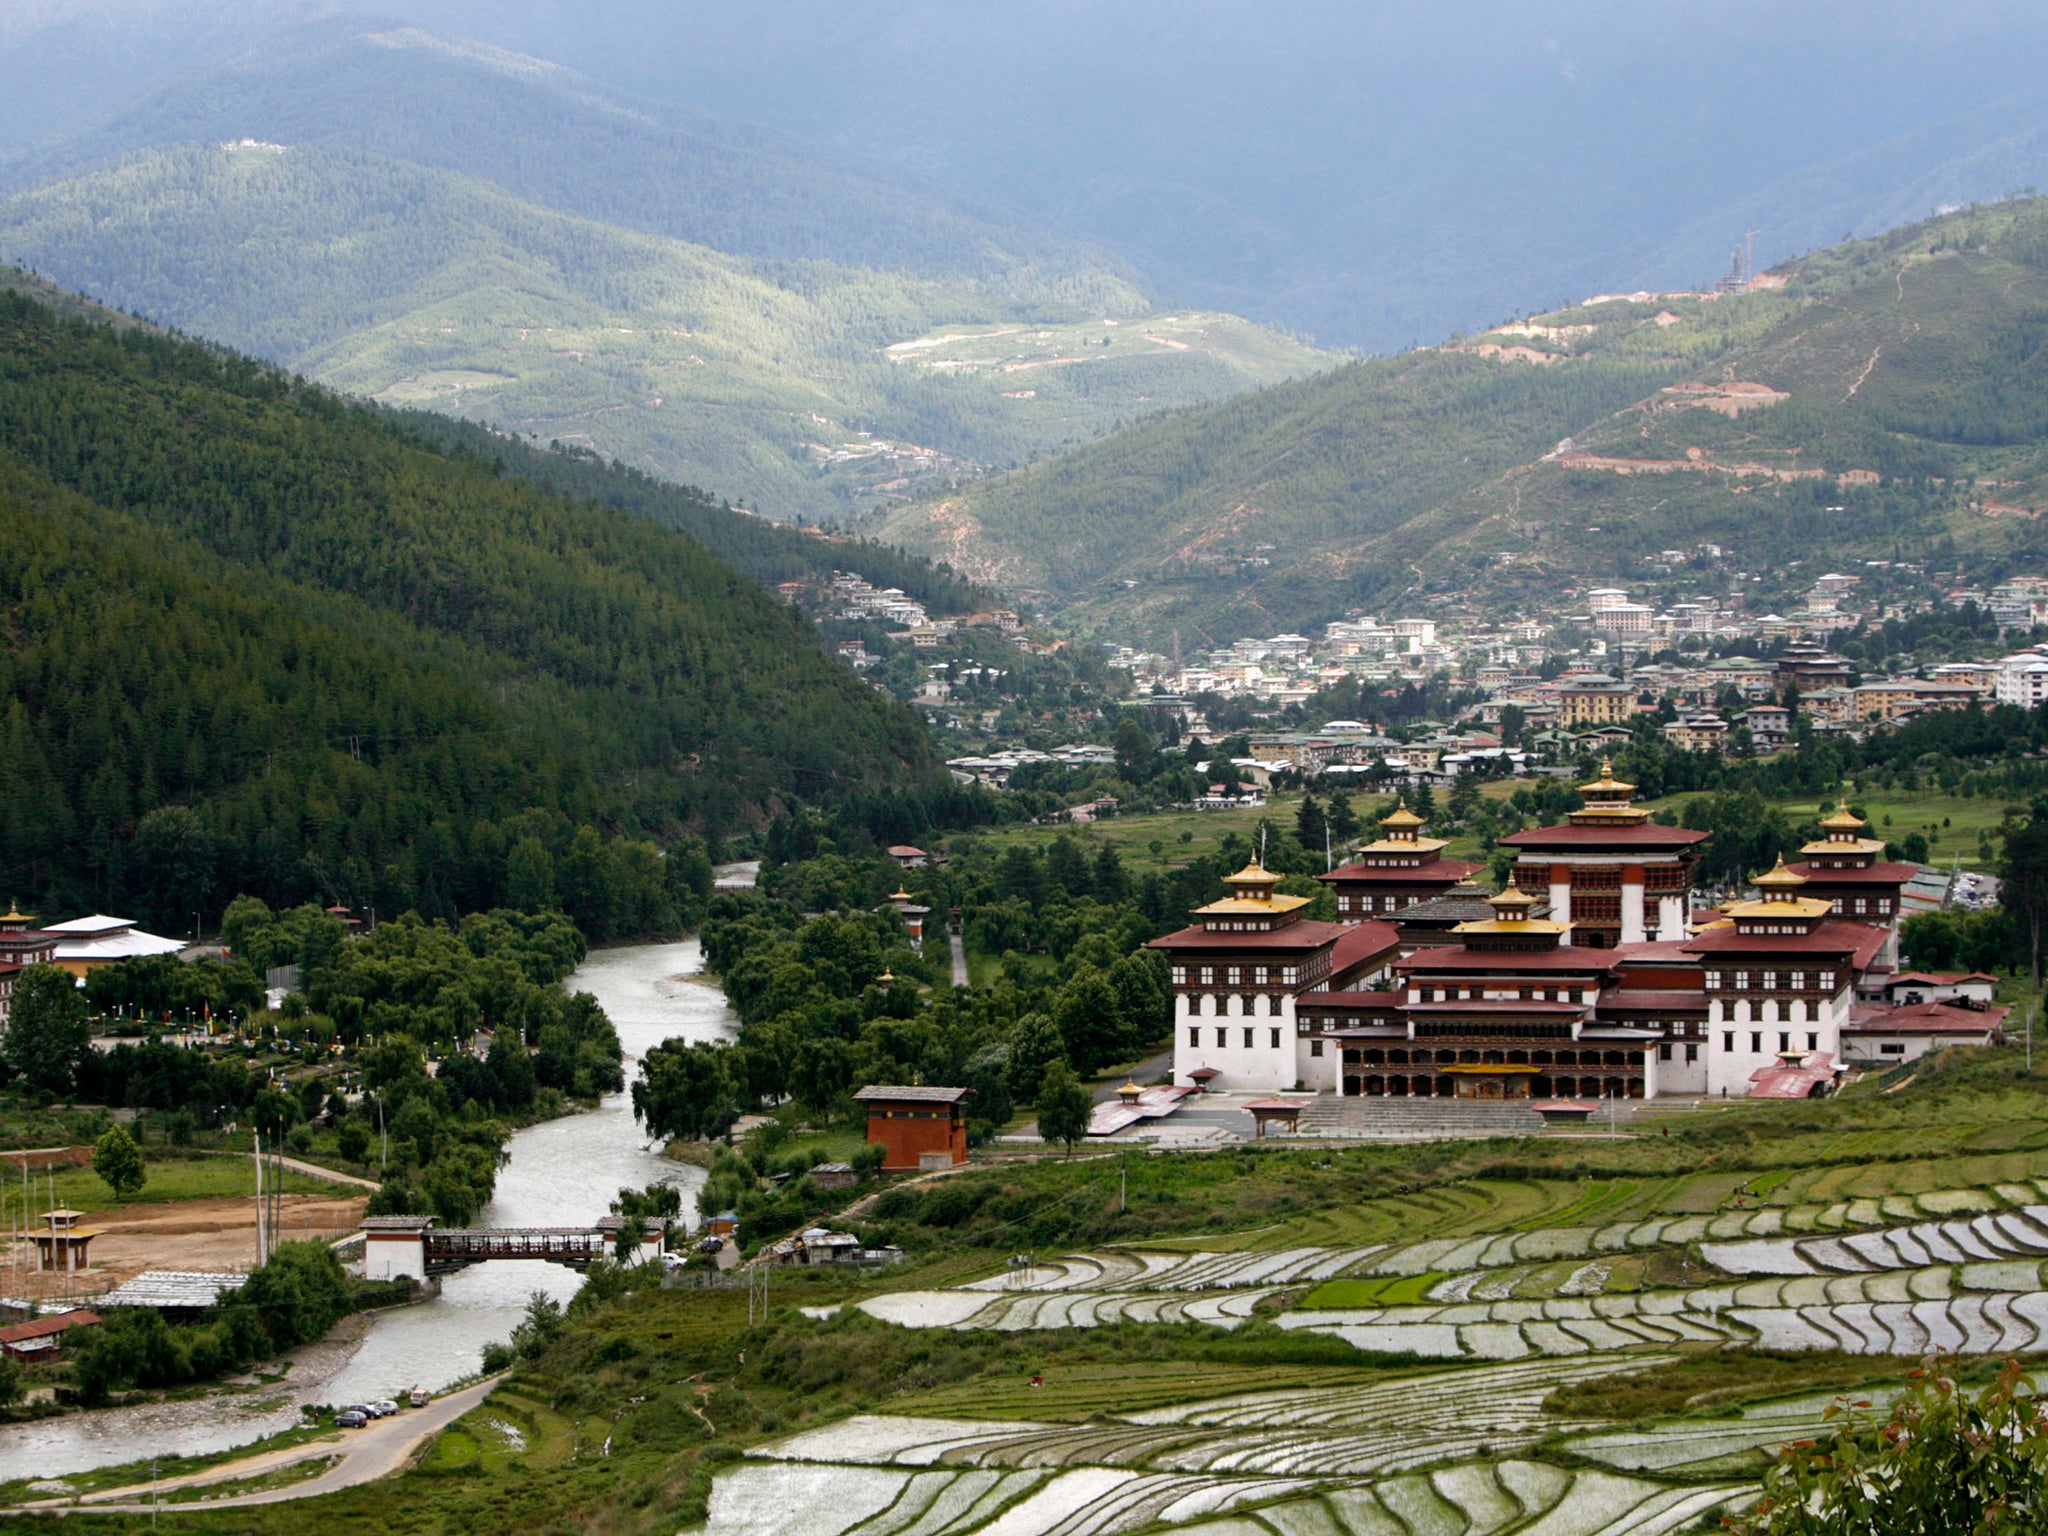 A view of the fortress, Tashichhodzong, in Thimpu, Bhutan